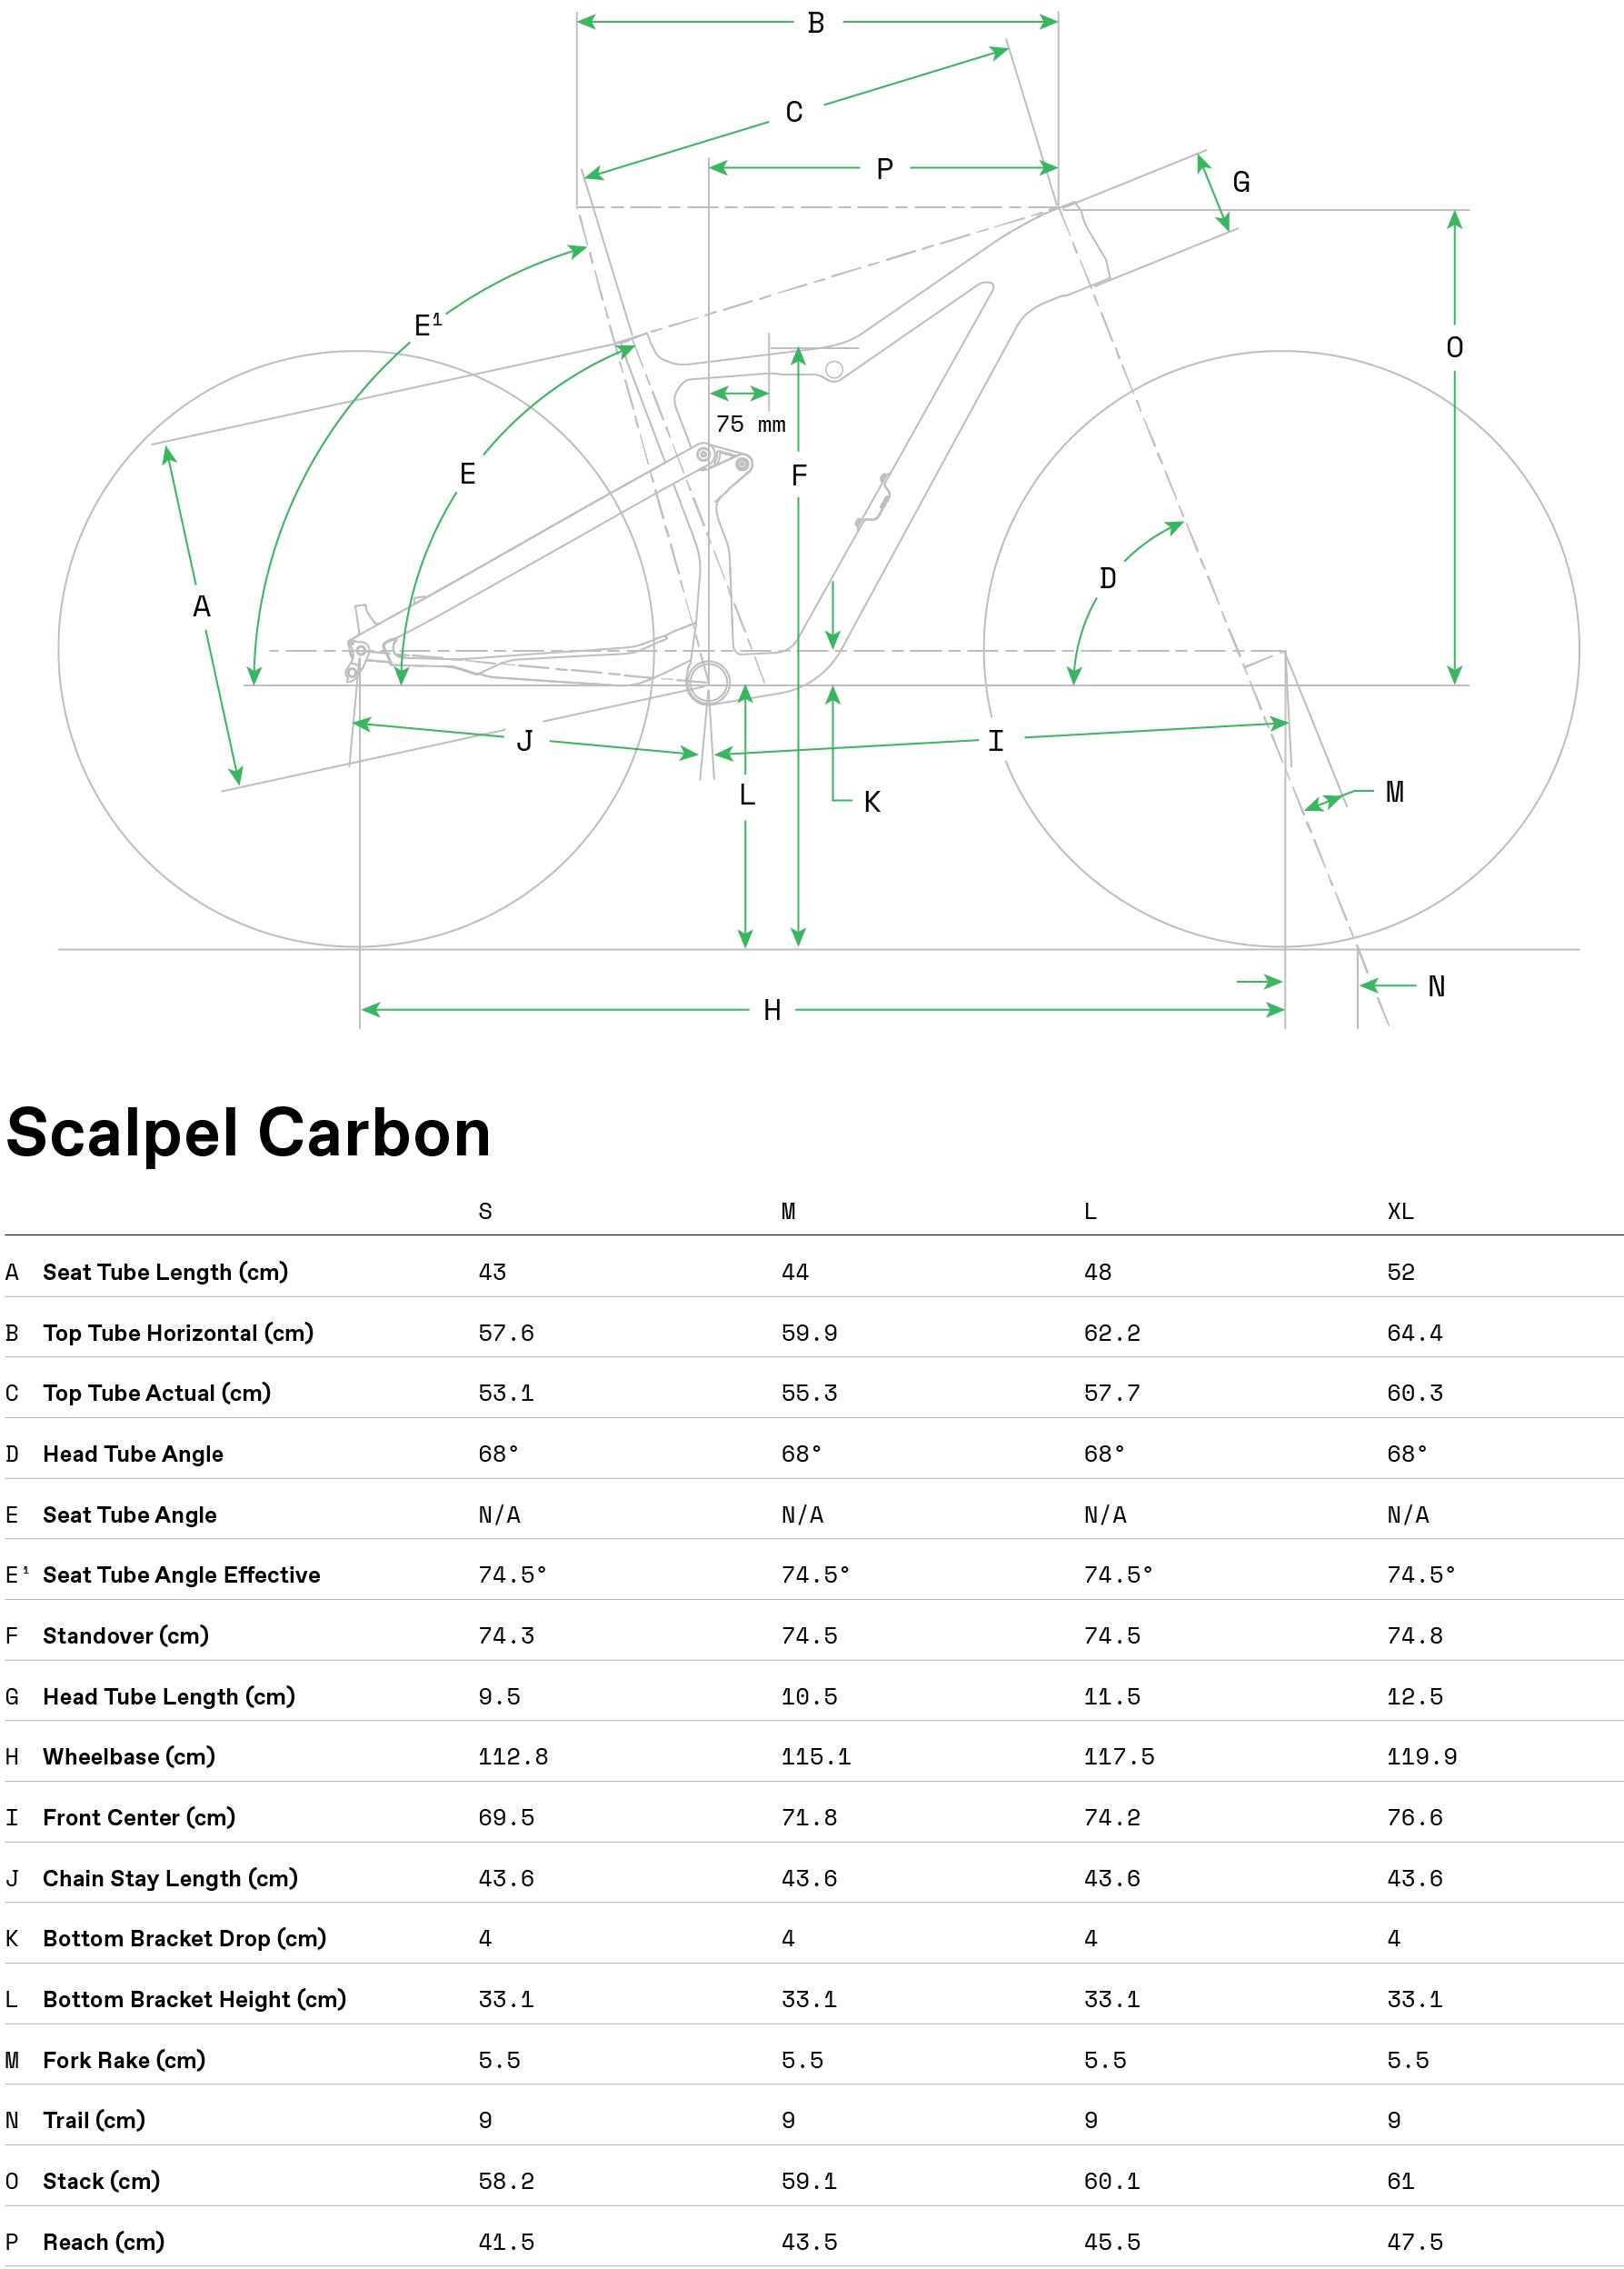 Geometria roweru Cannondale Scalpel Carbon